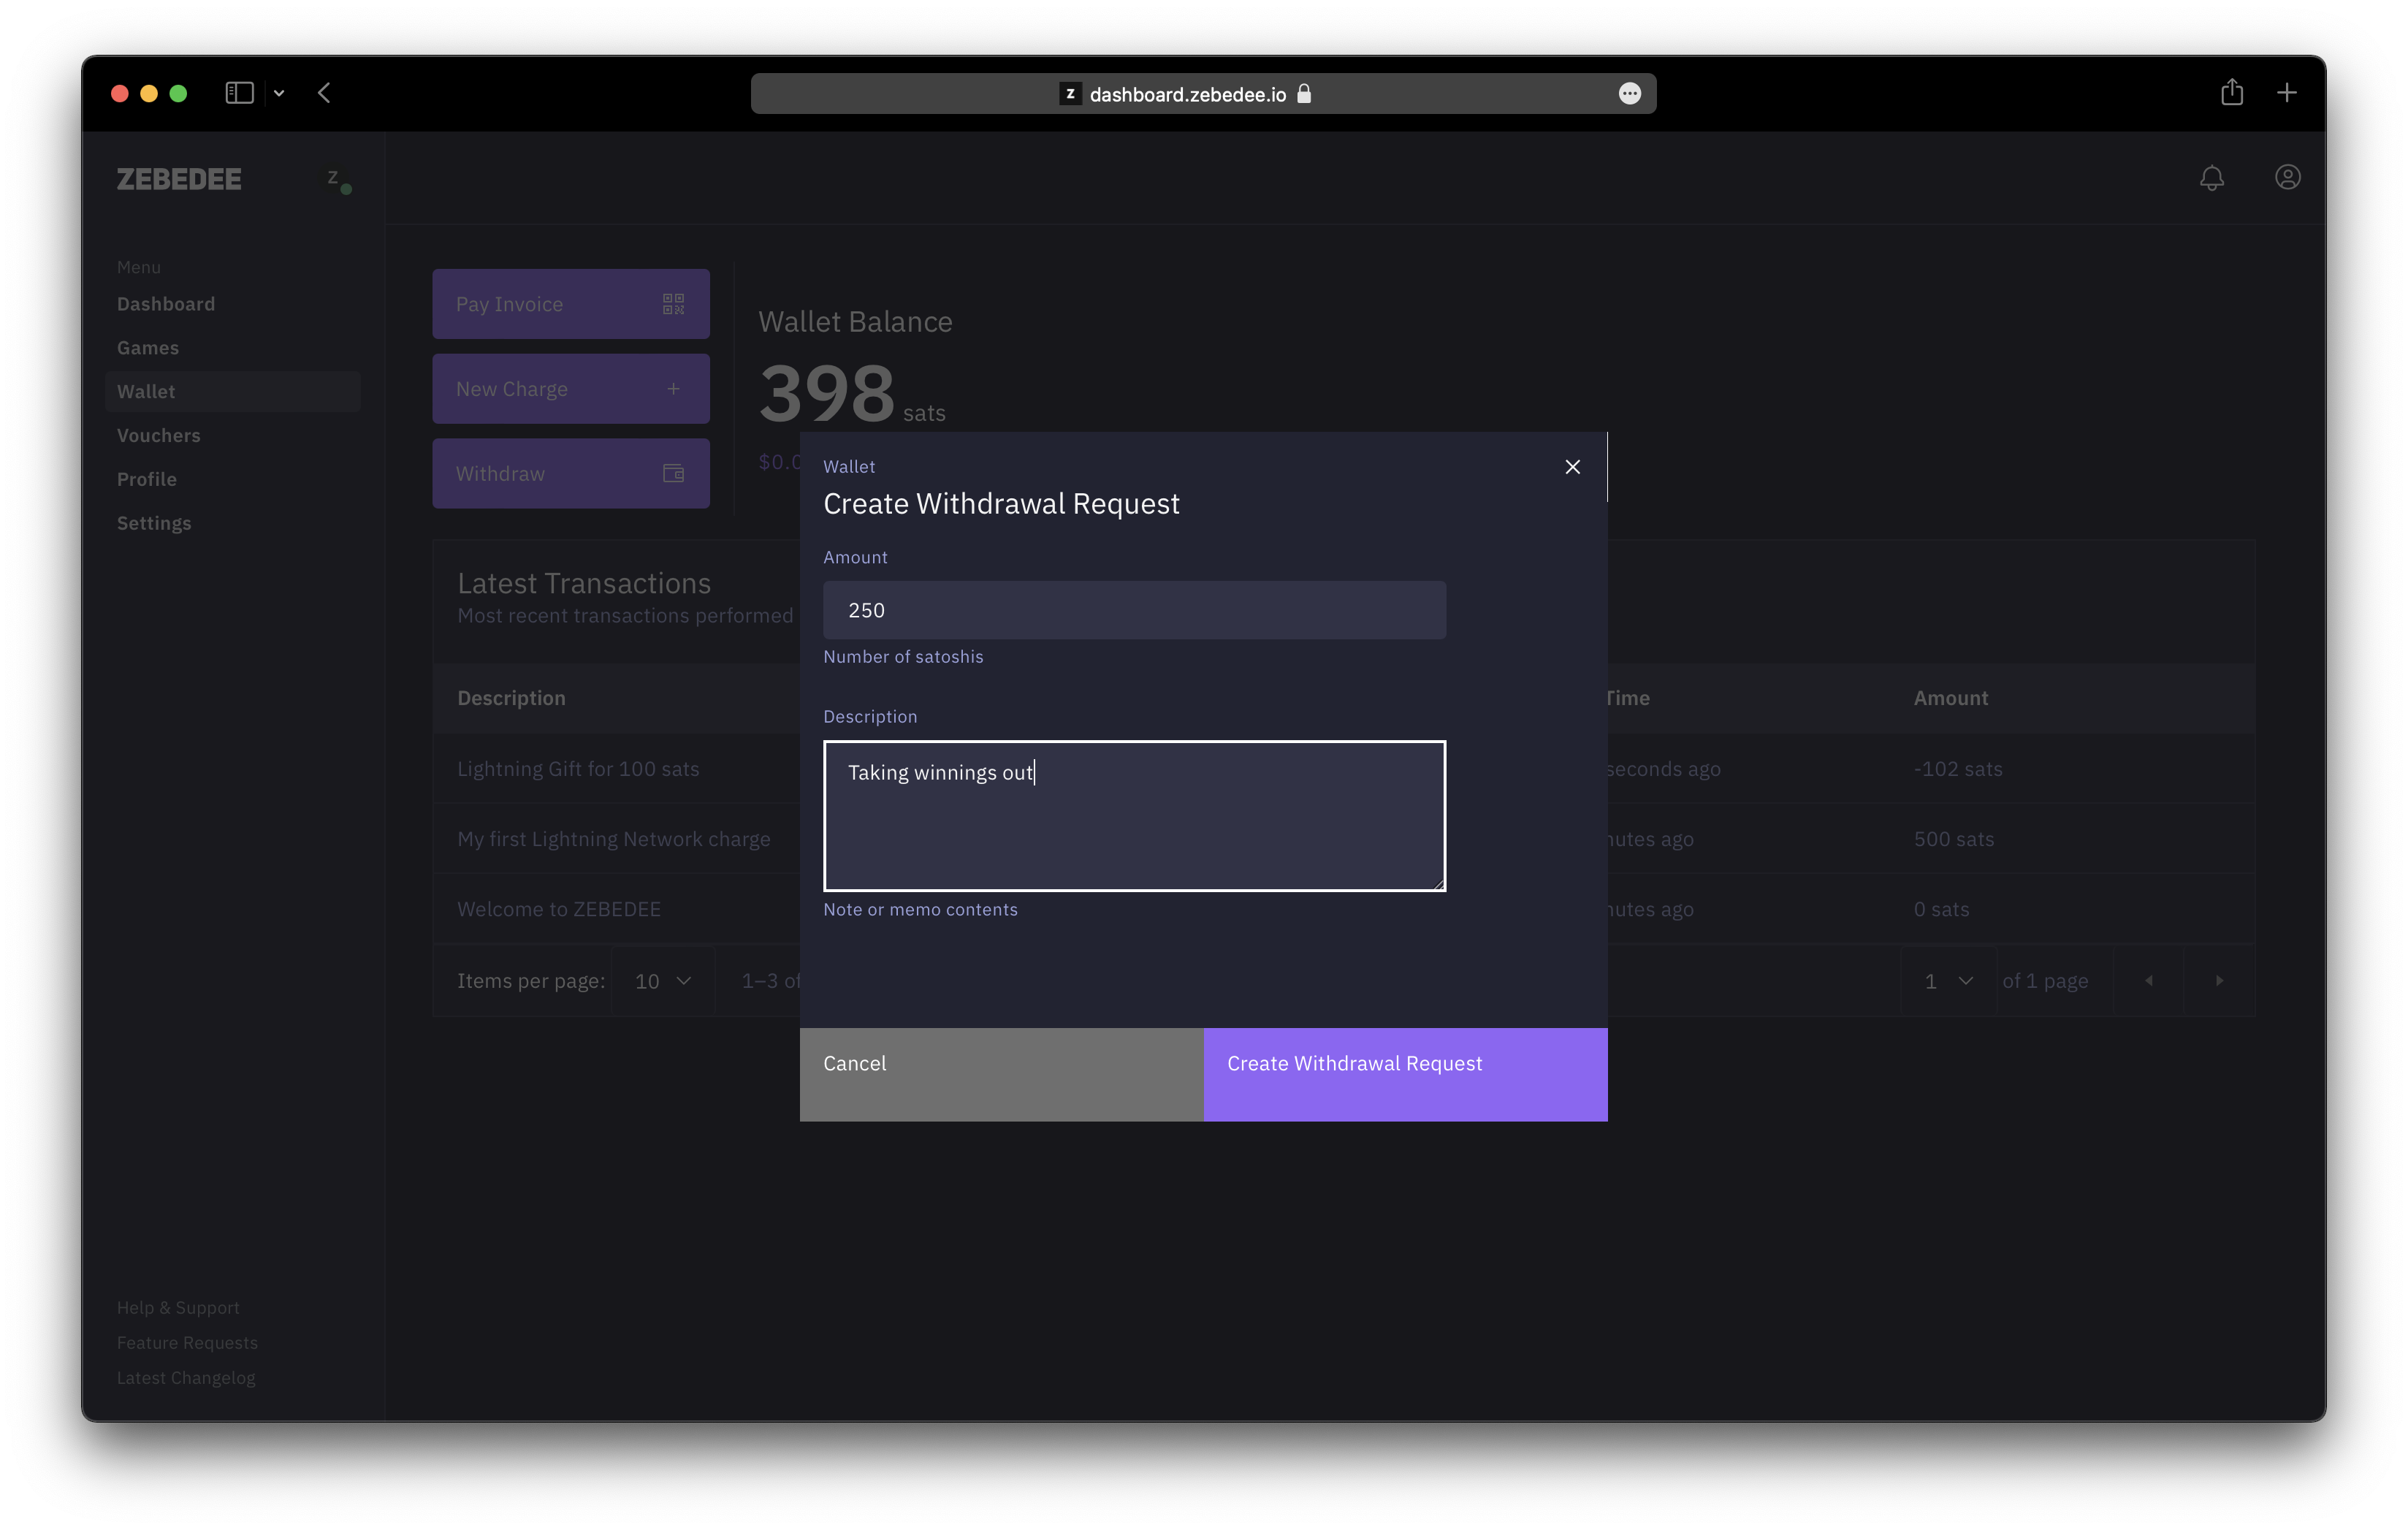 ZEBEDEE Developer Dashboard | Withdrawal Request Form